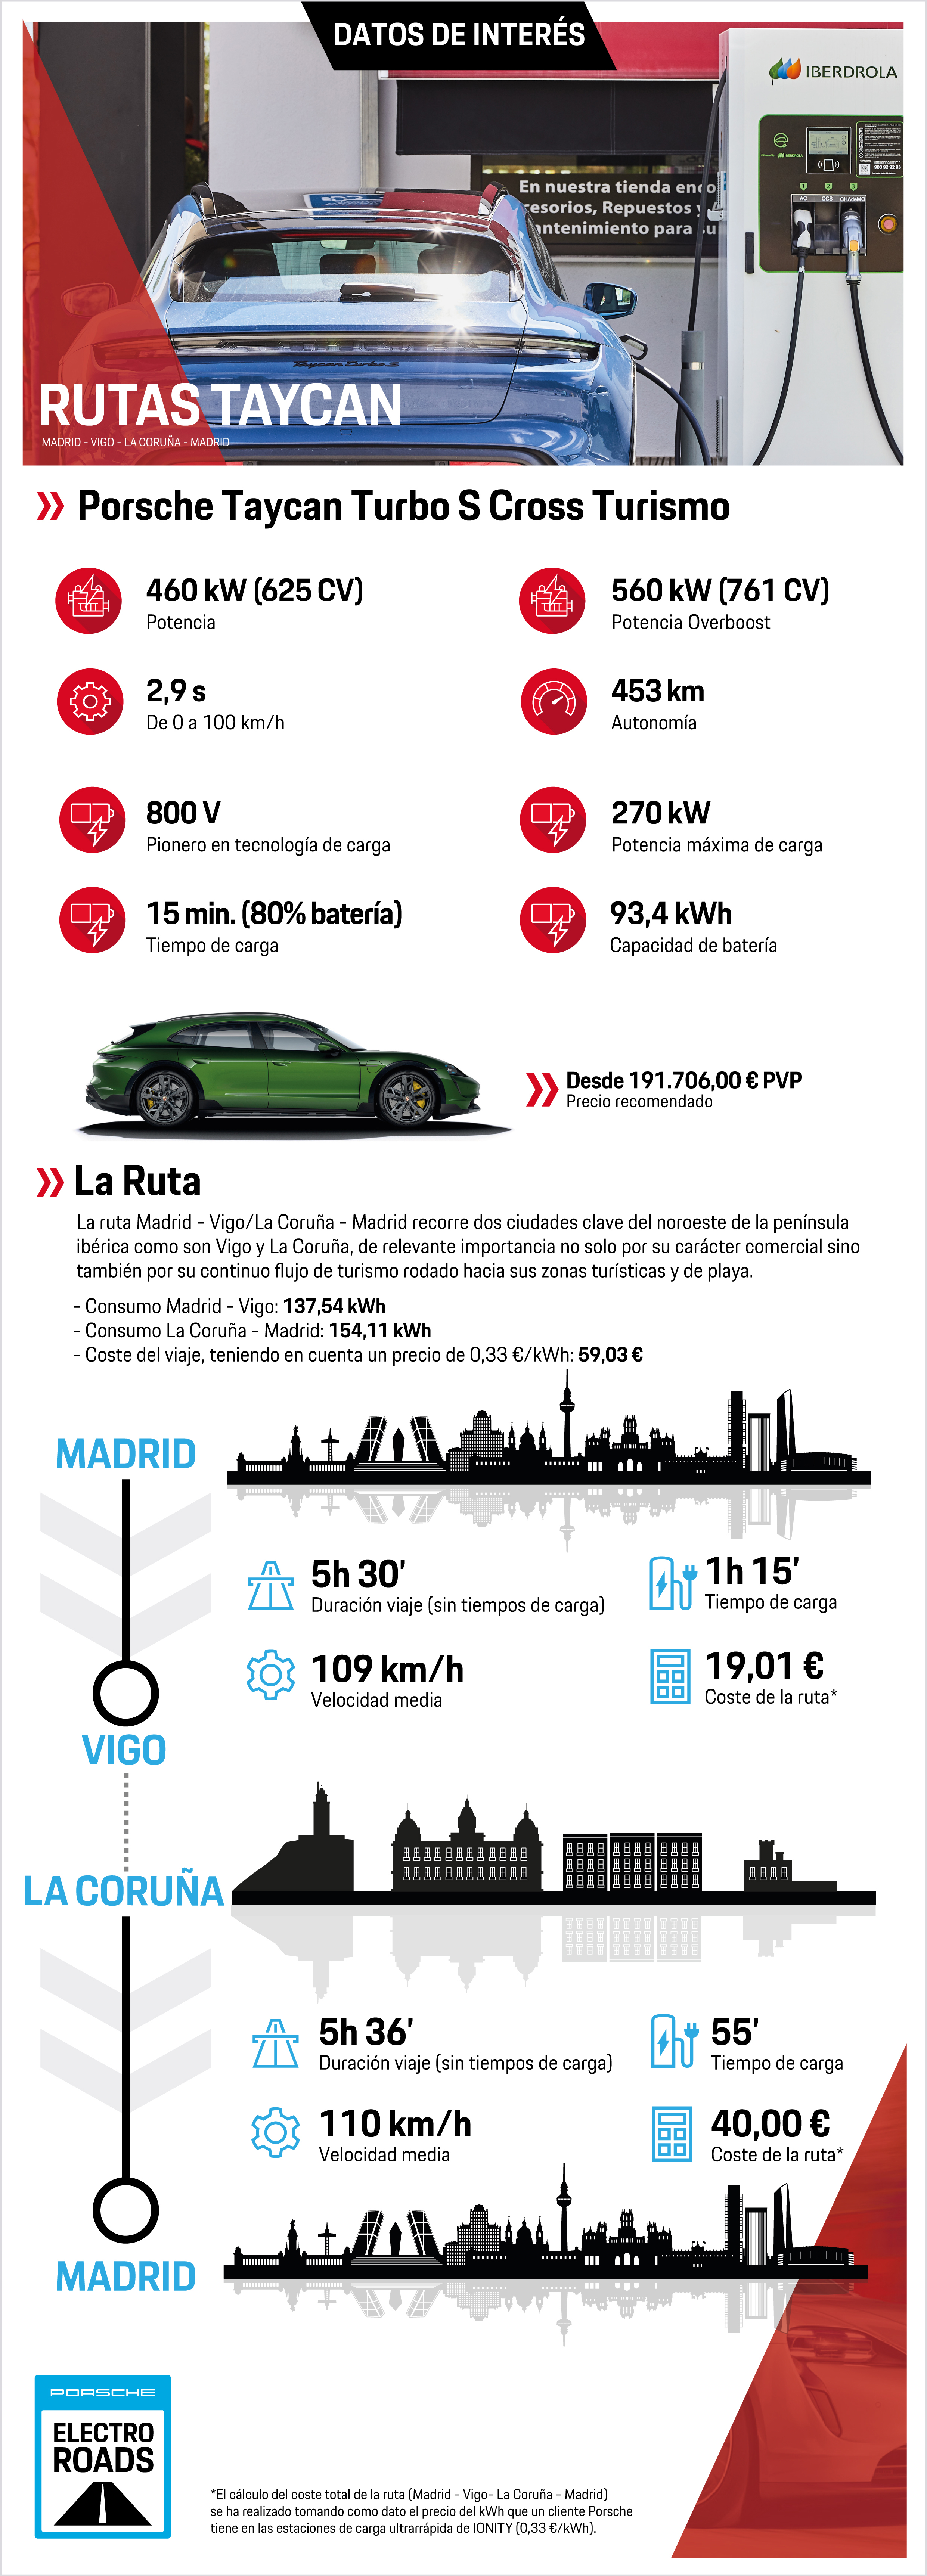 Infografía Rutas Taycan - Galicia, datos de interés, 2021, Porsche Ibérica